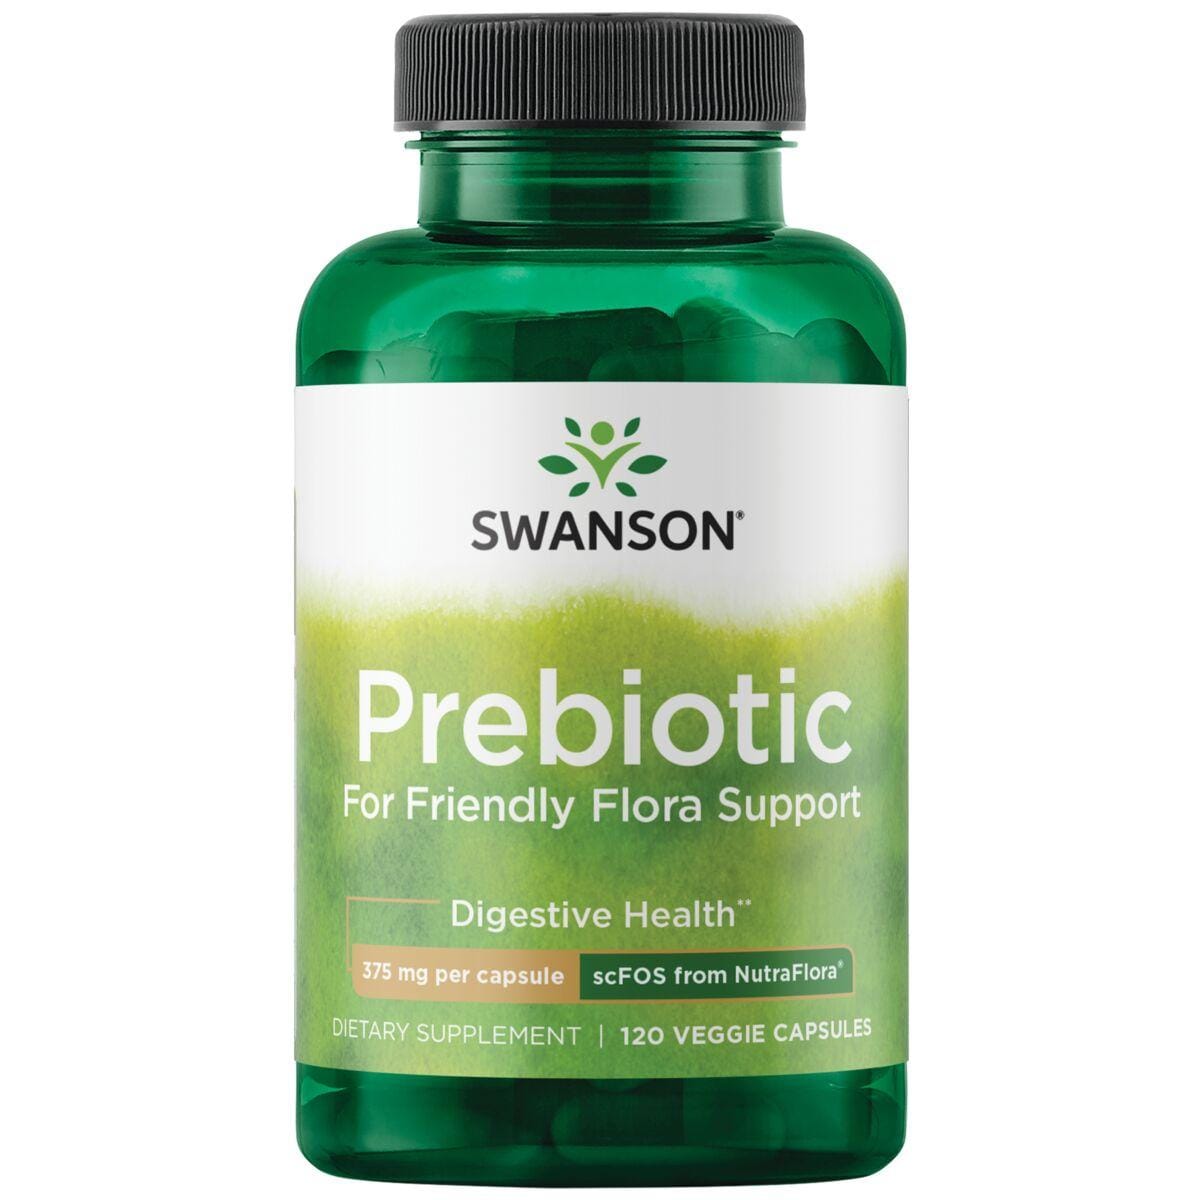 Swanson Probiotics Prebiotic for Friendly Flora Support - Fos from Nutraflora Supplement Vitamin | 375 mg | 120 Veg Caps